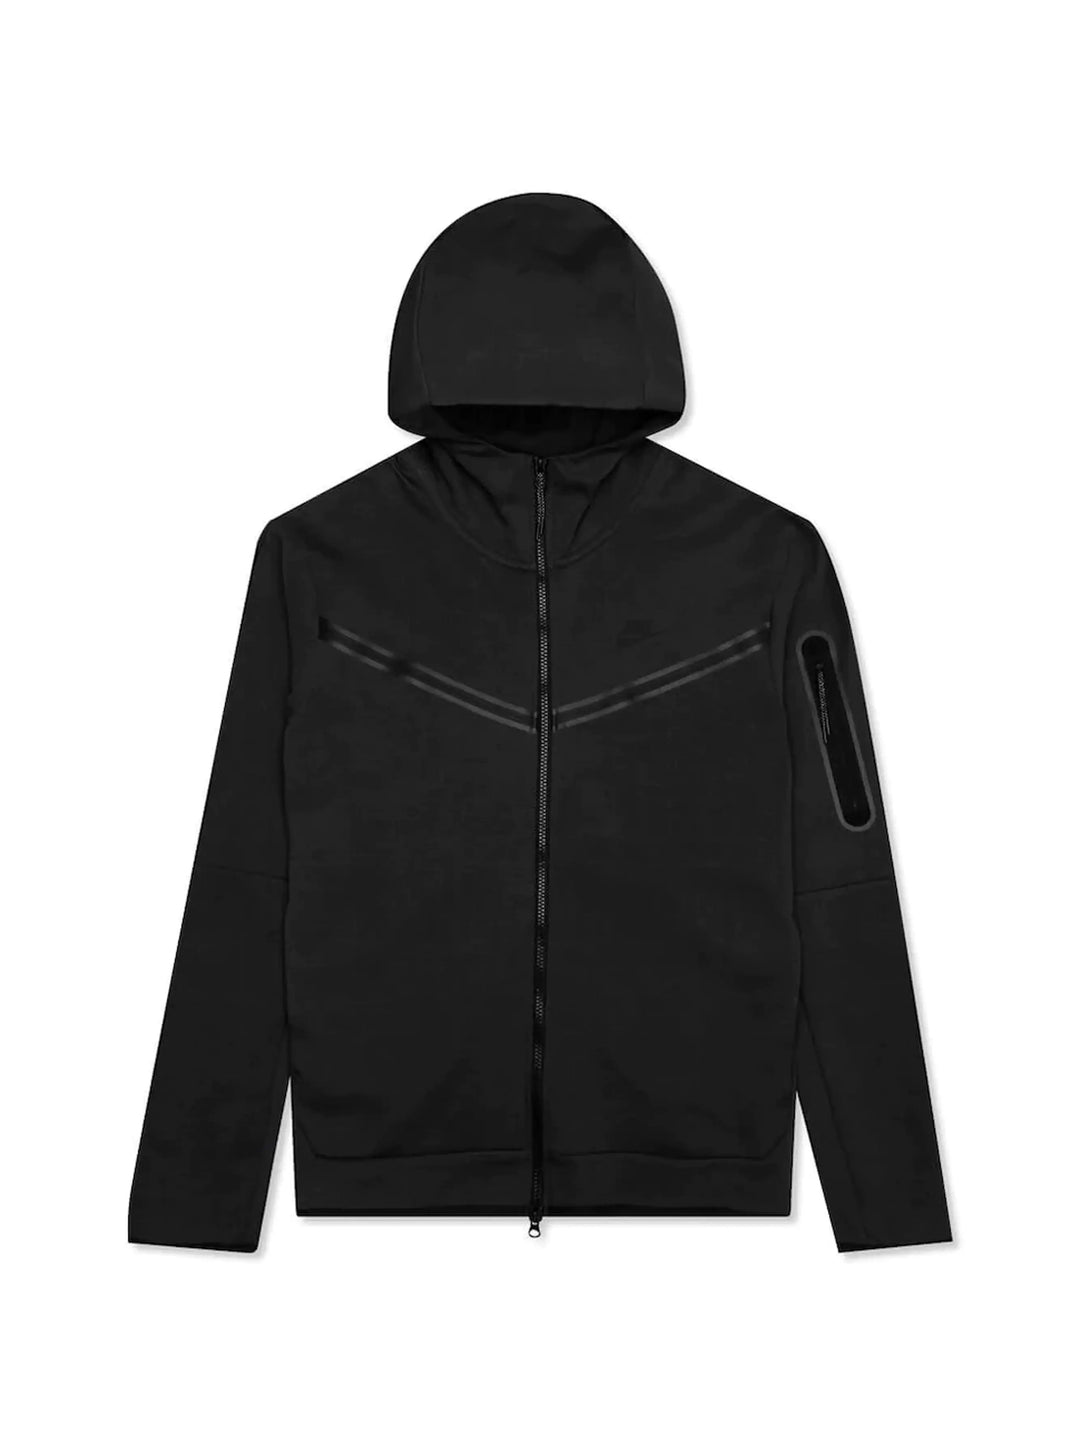 Nike Sportswear Tech Fleece Full-Zip Hoodie Black in Melbourne, Australia - Prior